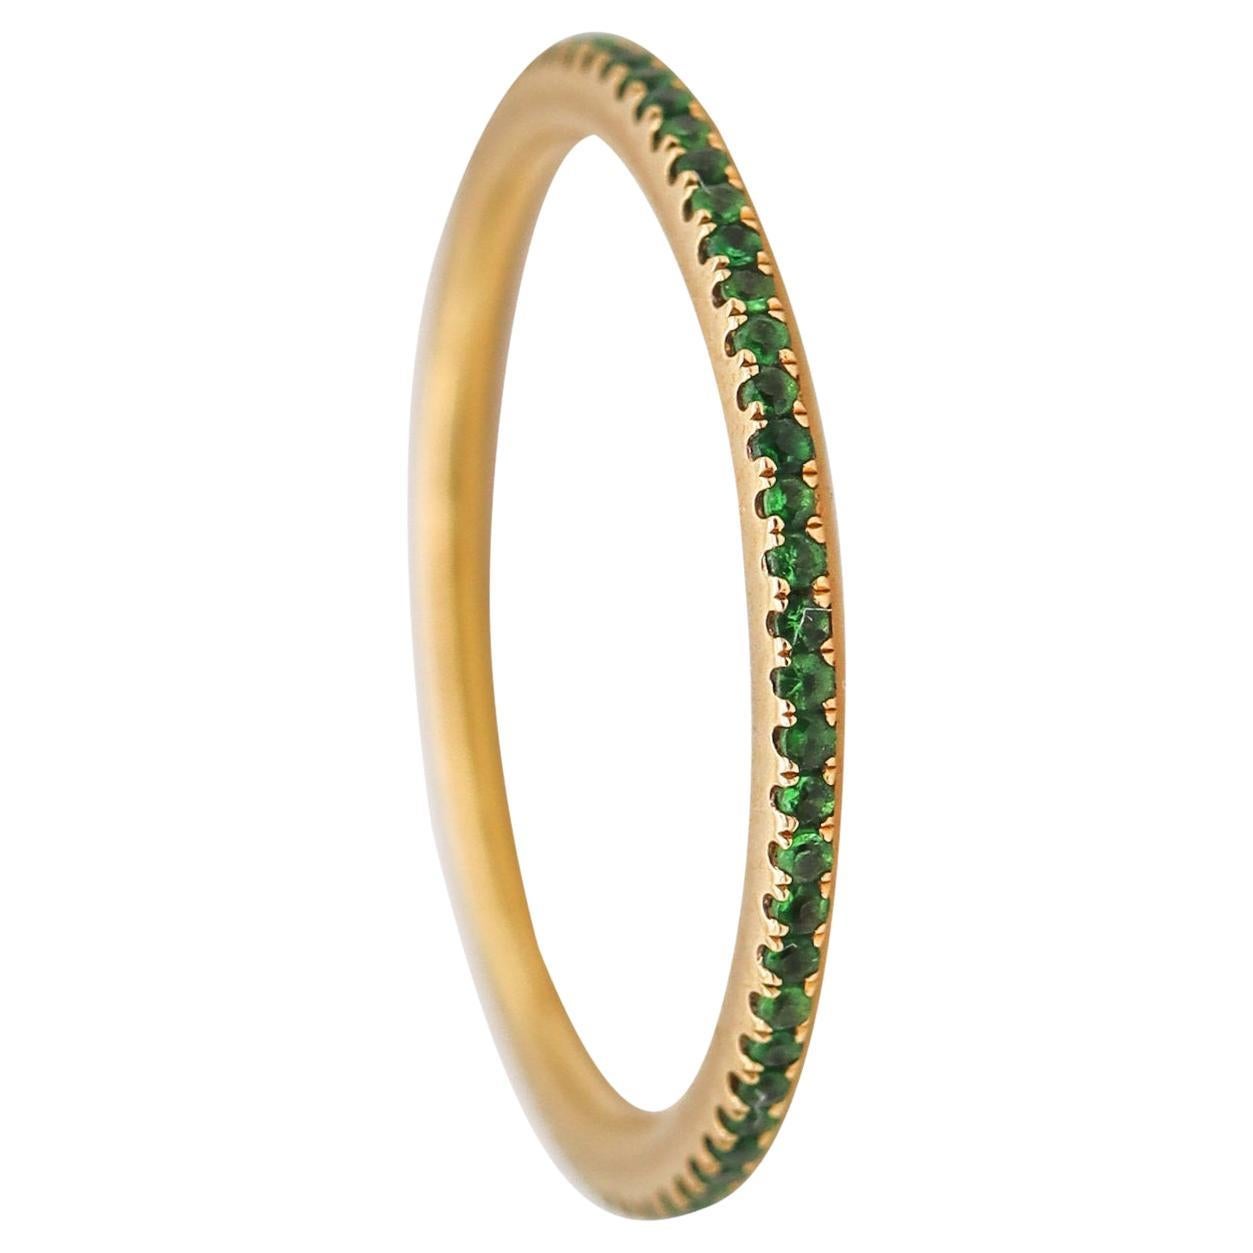 Ewiges Band Ringteiler aus 18Kt Gelbgold mit Vivid grünen Tsavoriten